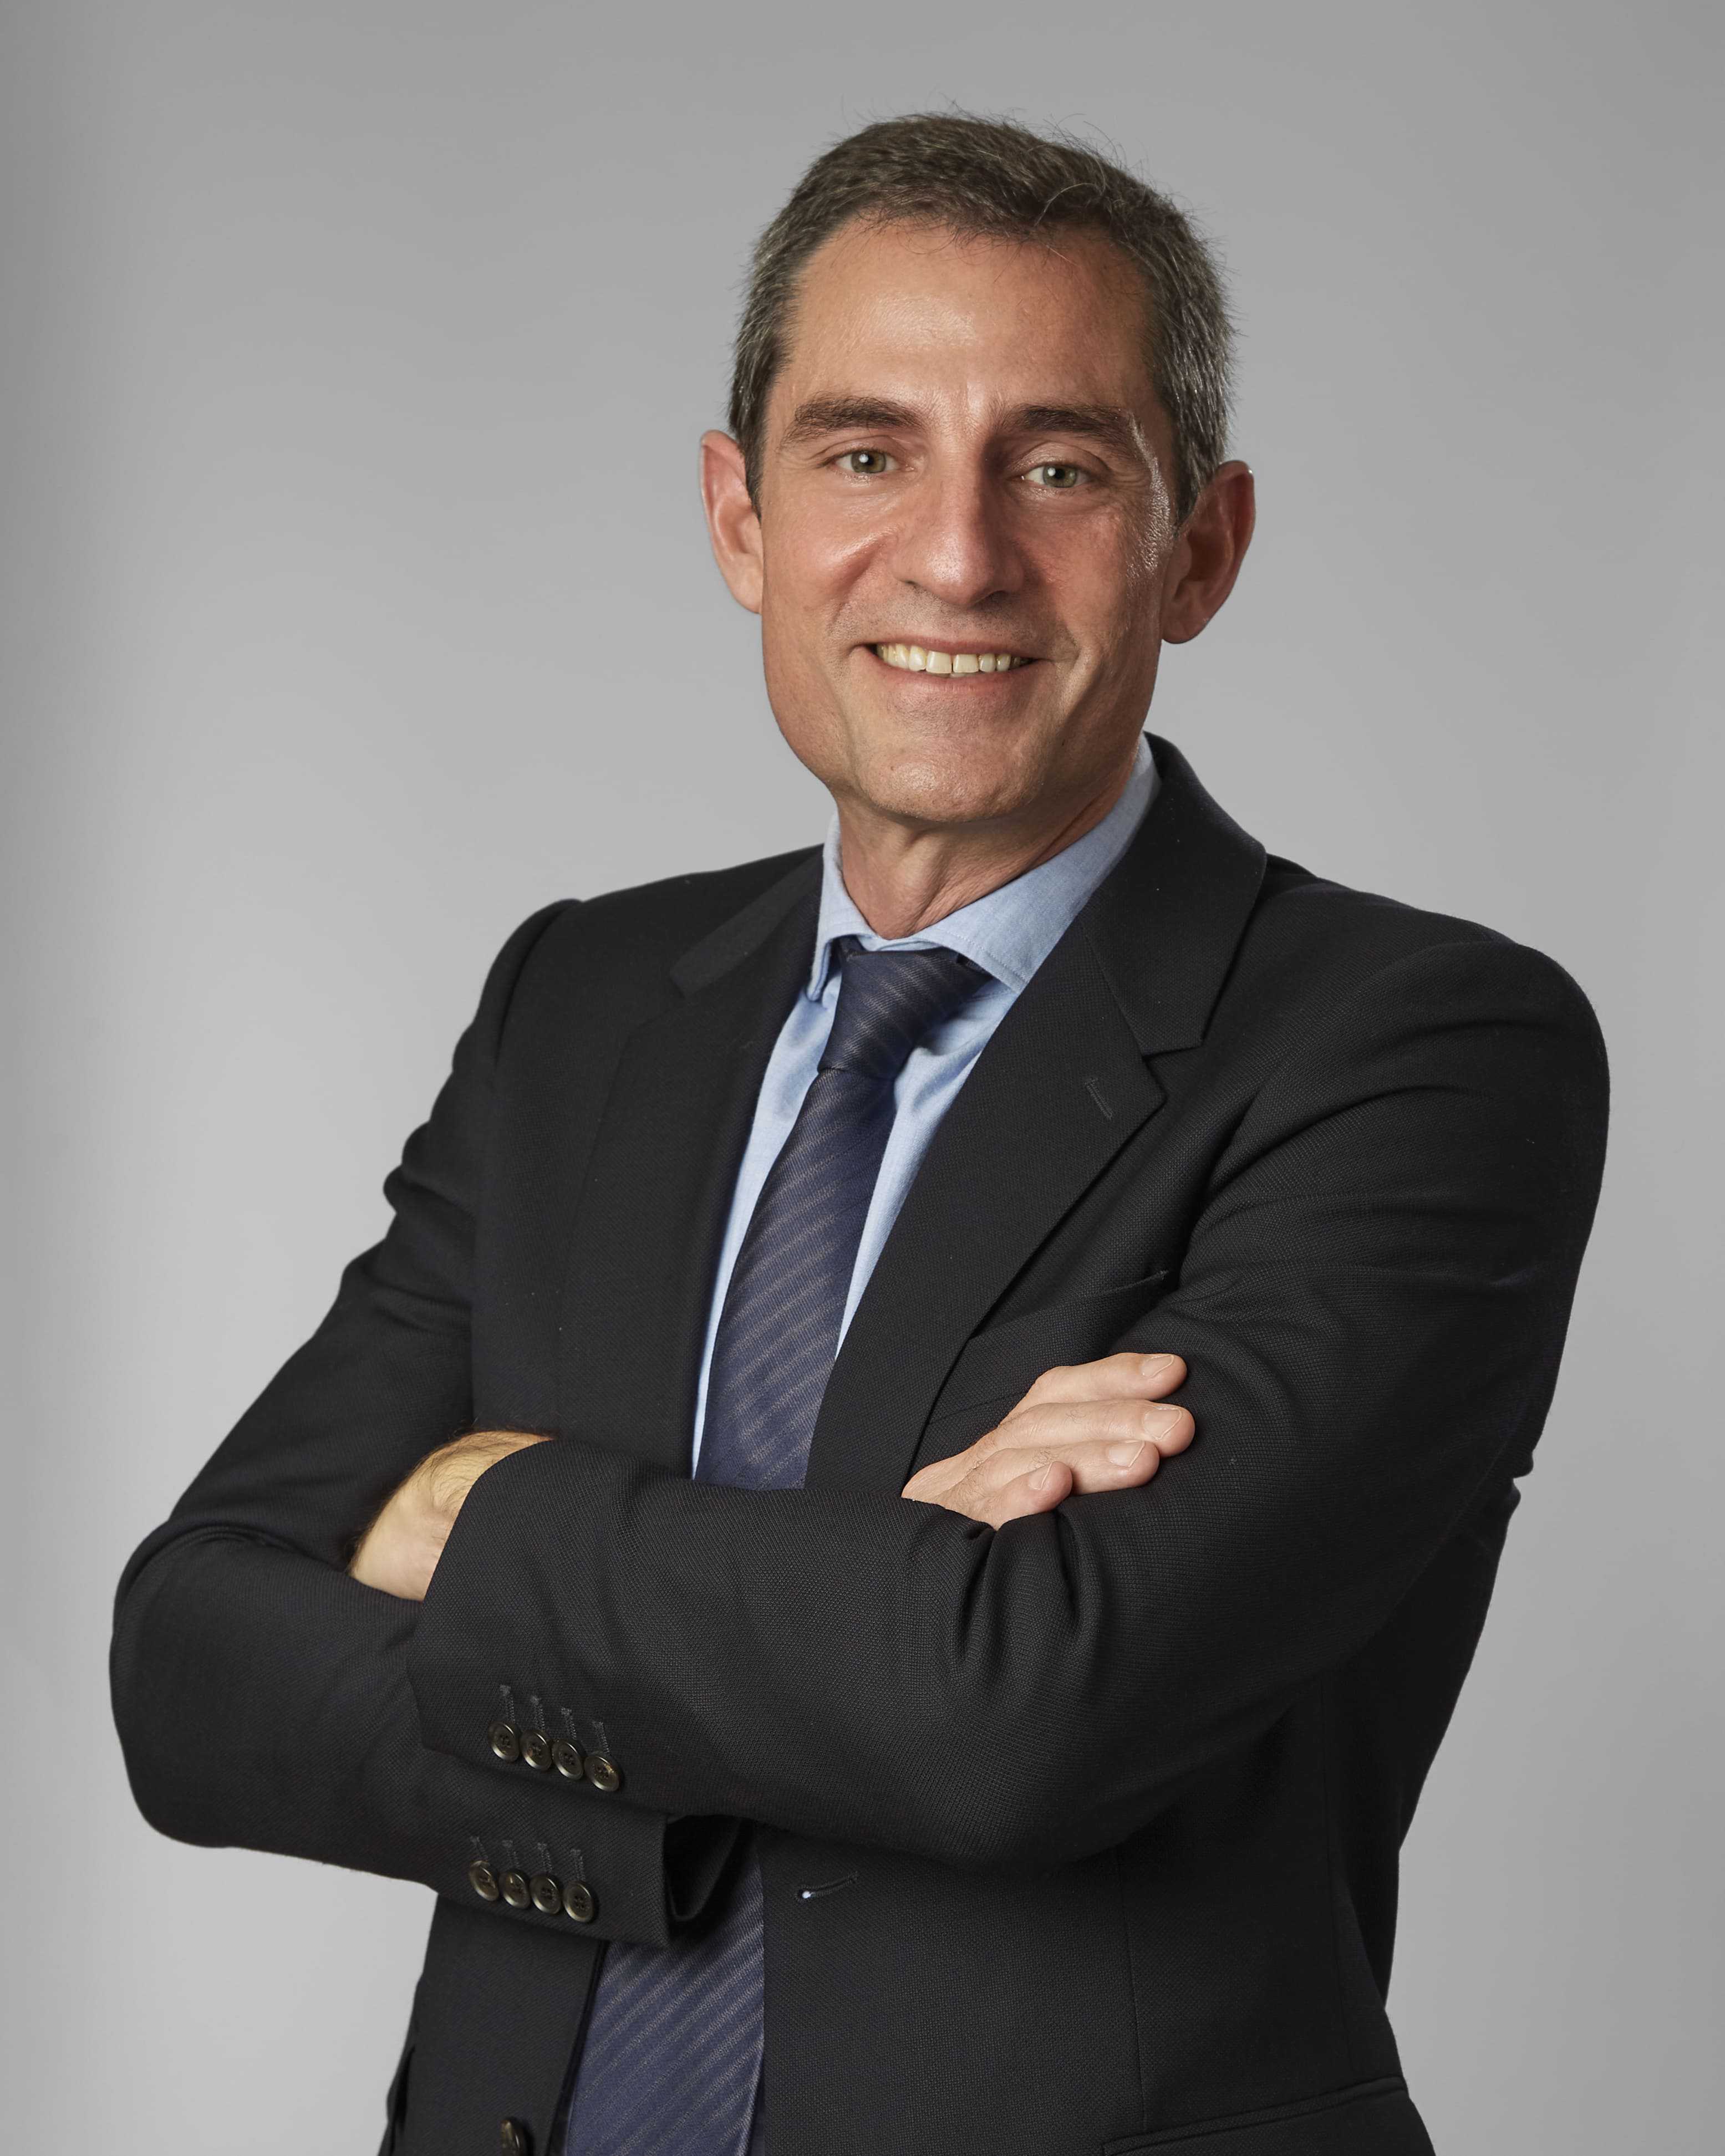 Martín Tolcachir, CEO Global de Grupo Dia